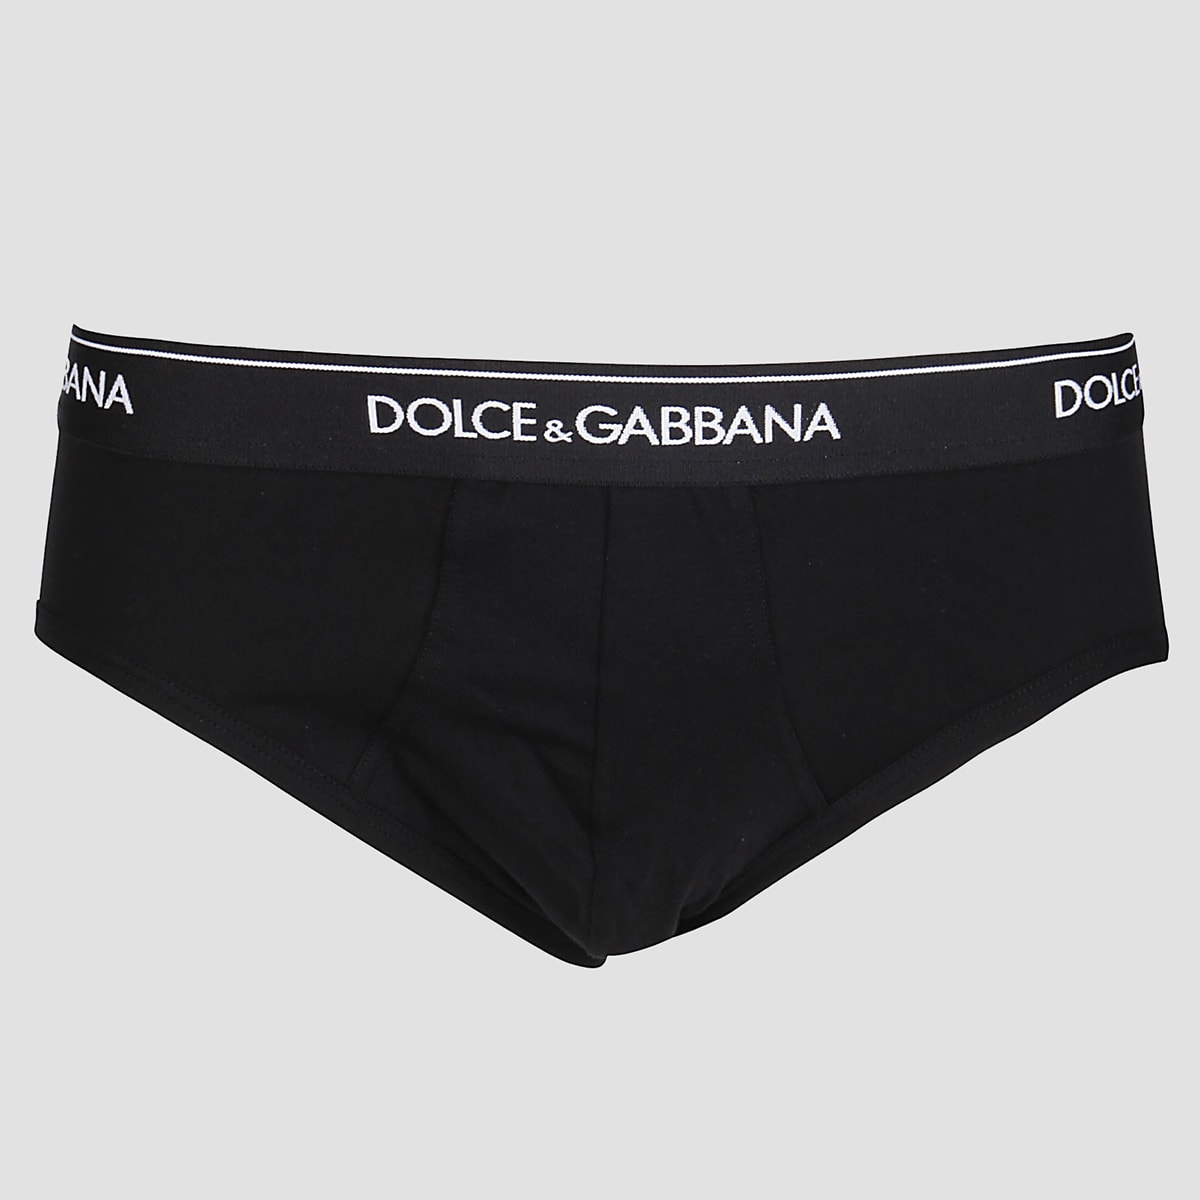 Dolce & Gabbana Black And White Cotton Brief Set